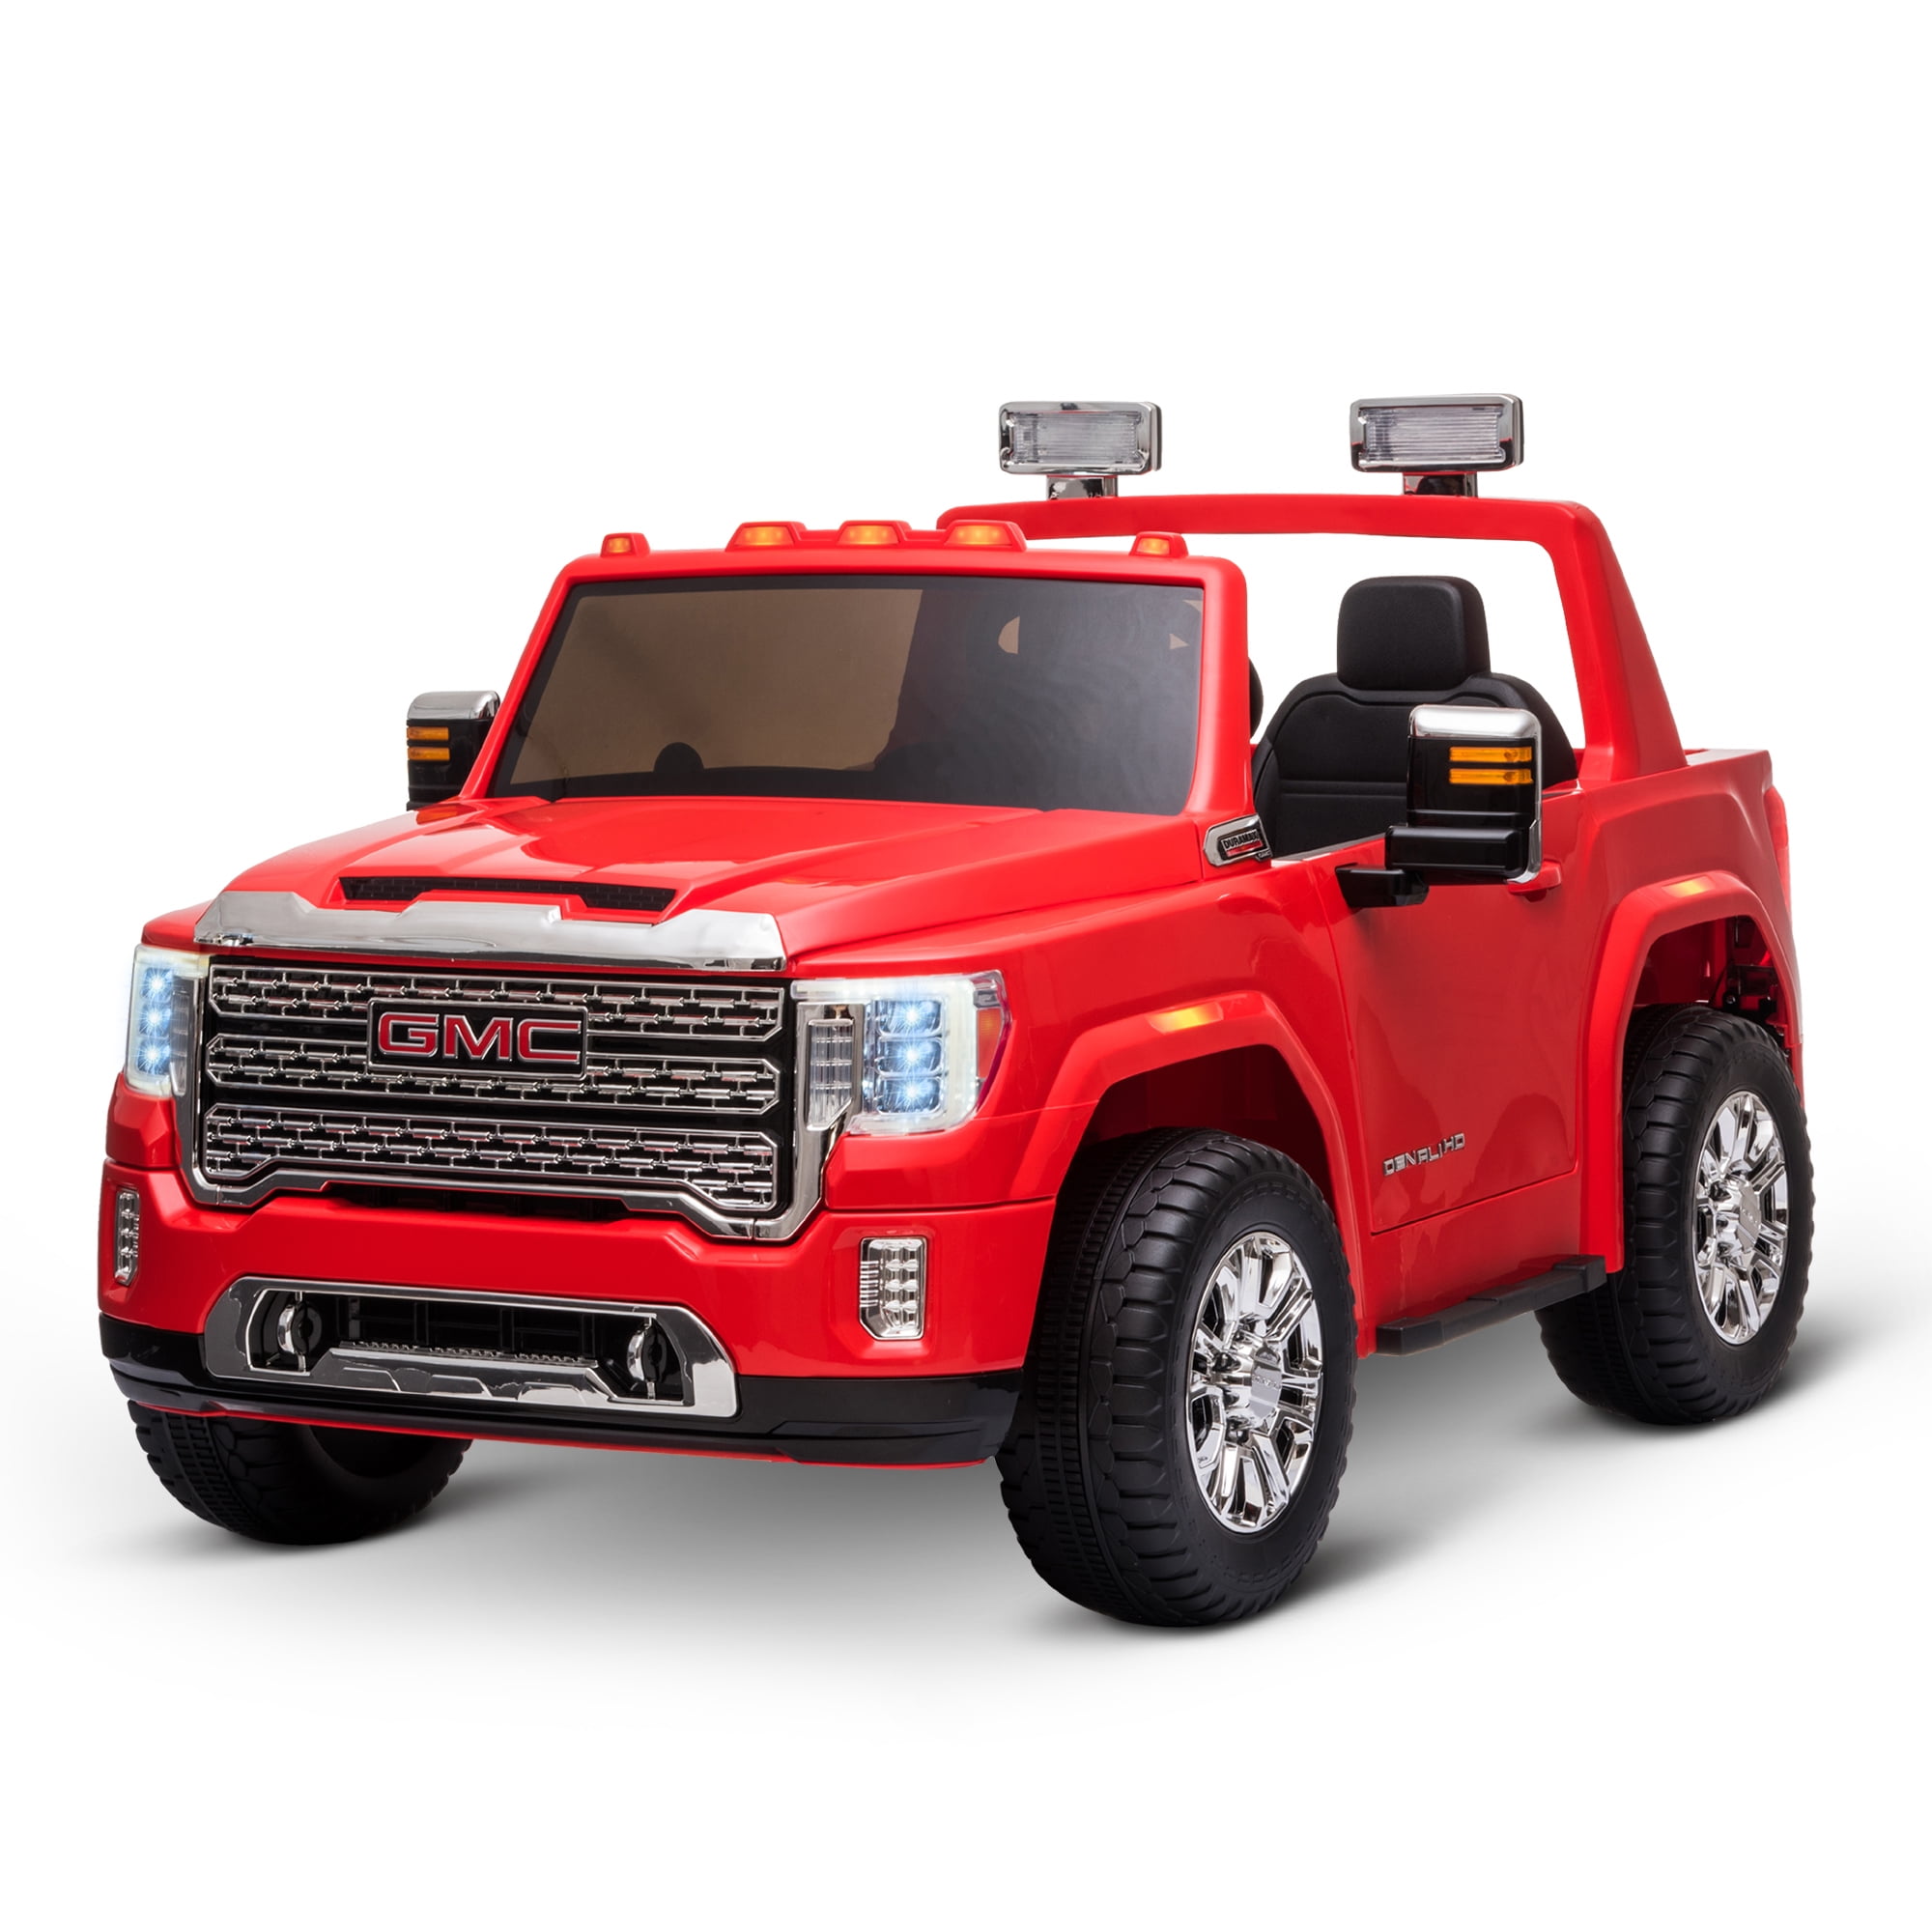 Aosom 12V Battery Kids GMC Sierra HD Ride On Toy with Remote Control, Bright Headlights Gmc Ride On Truck With Remote Control